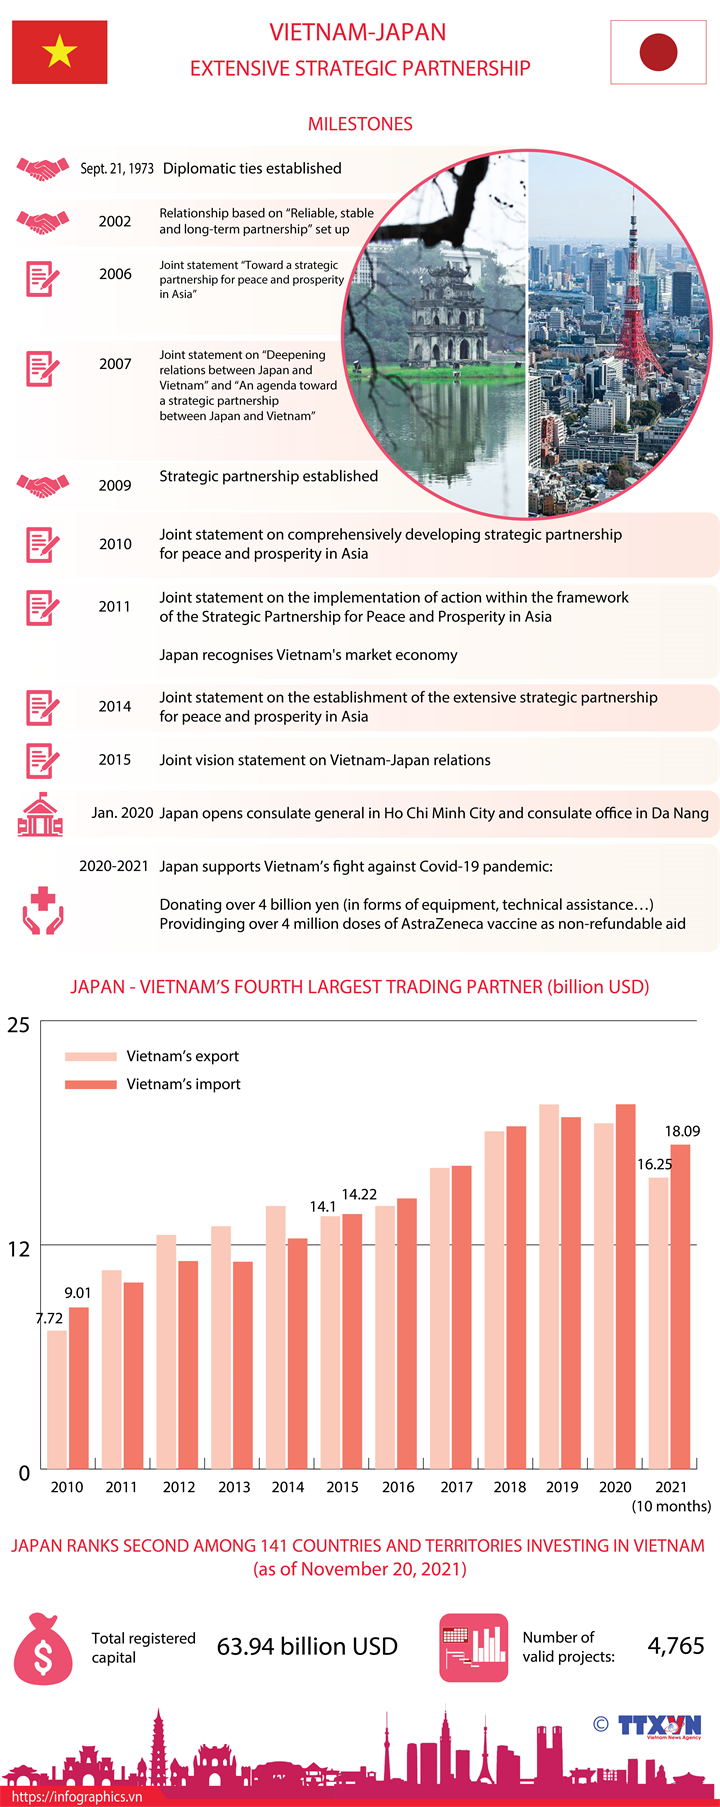 Vietnam-Japan extensive strategic partnership